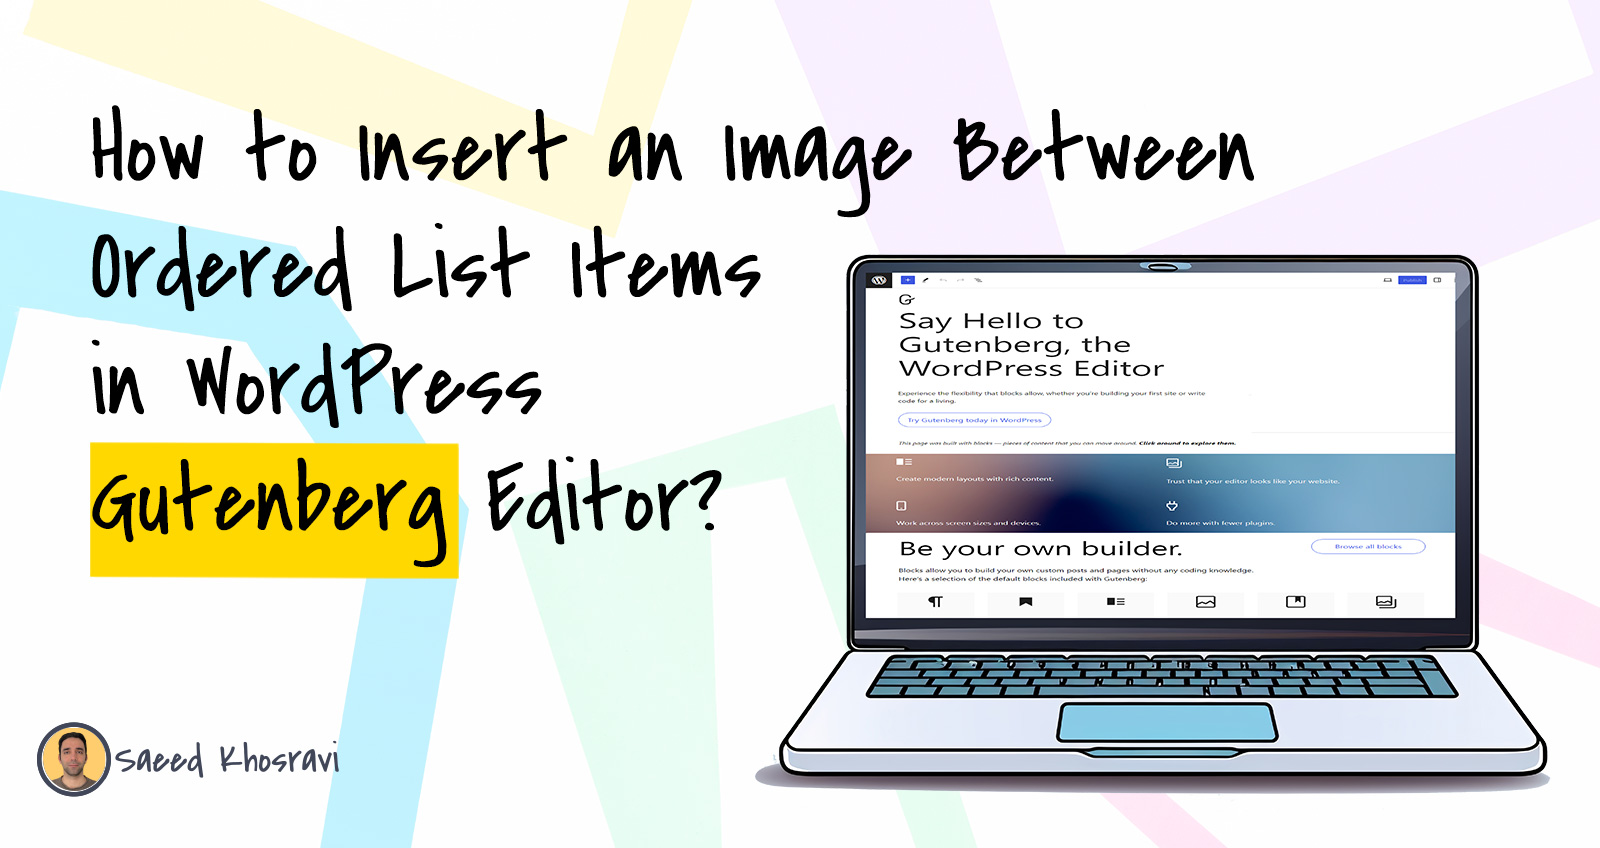 Insert an Image Between Ordered List Items in WordPress Gutenber Editor